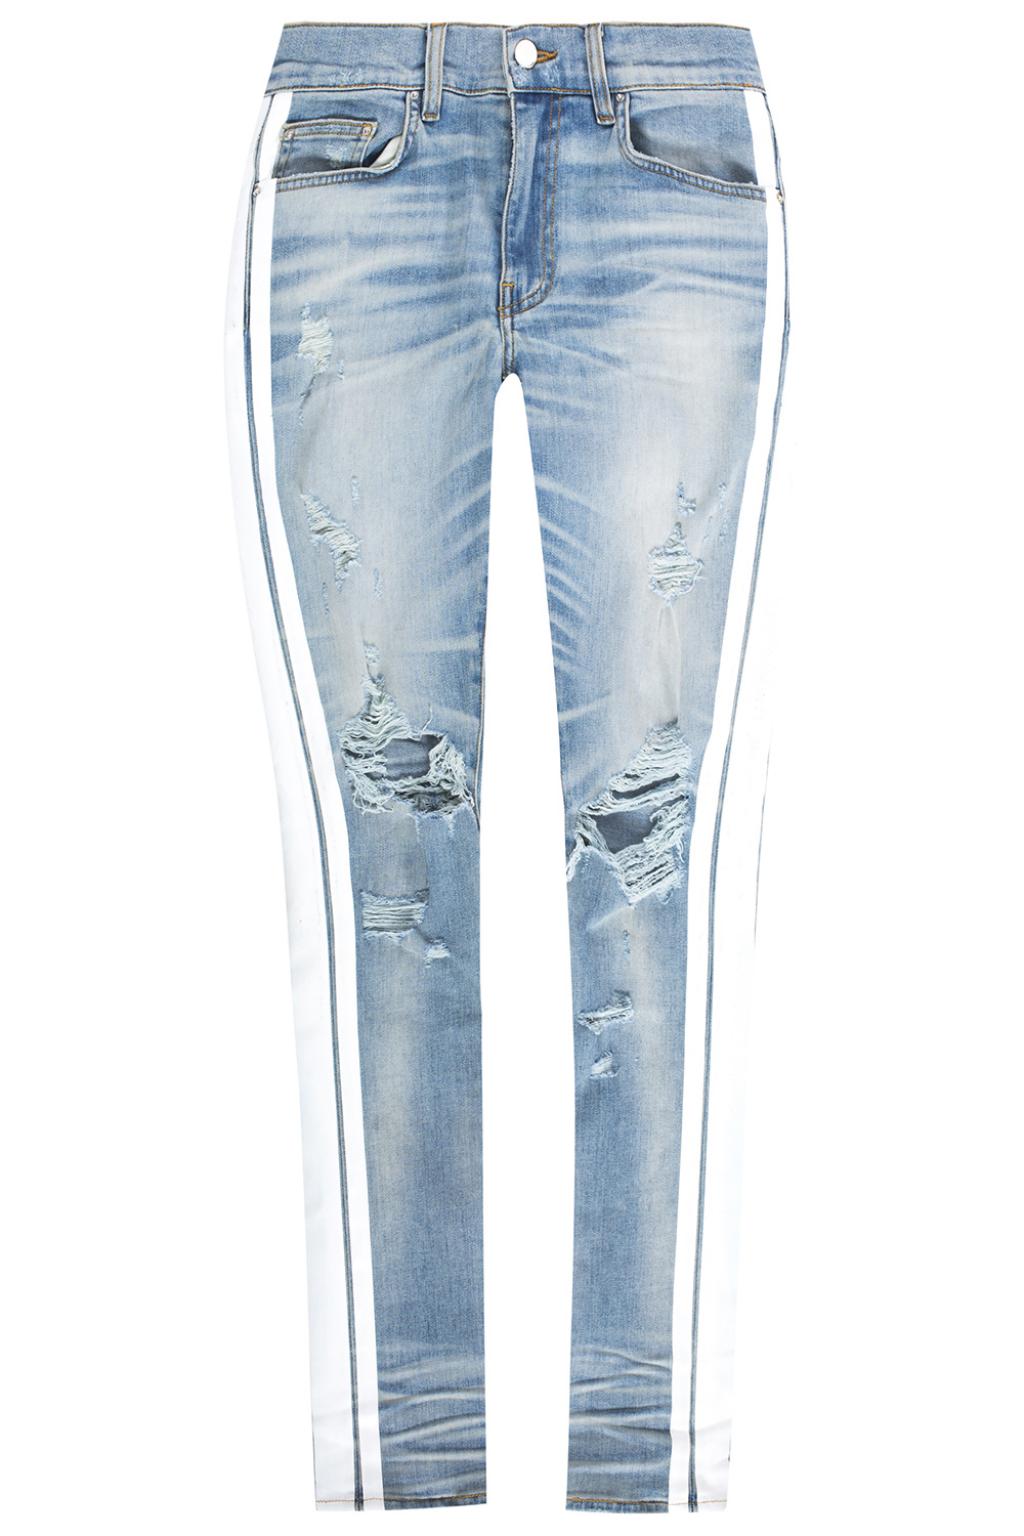 amiri jeans stripe